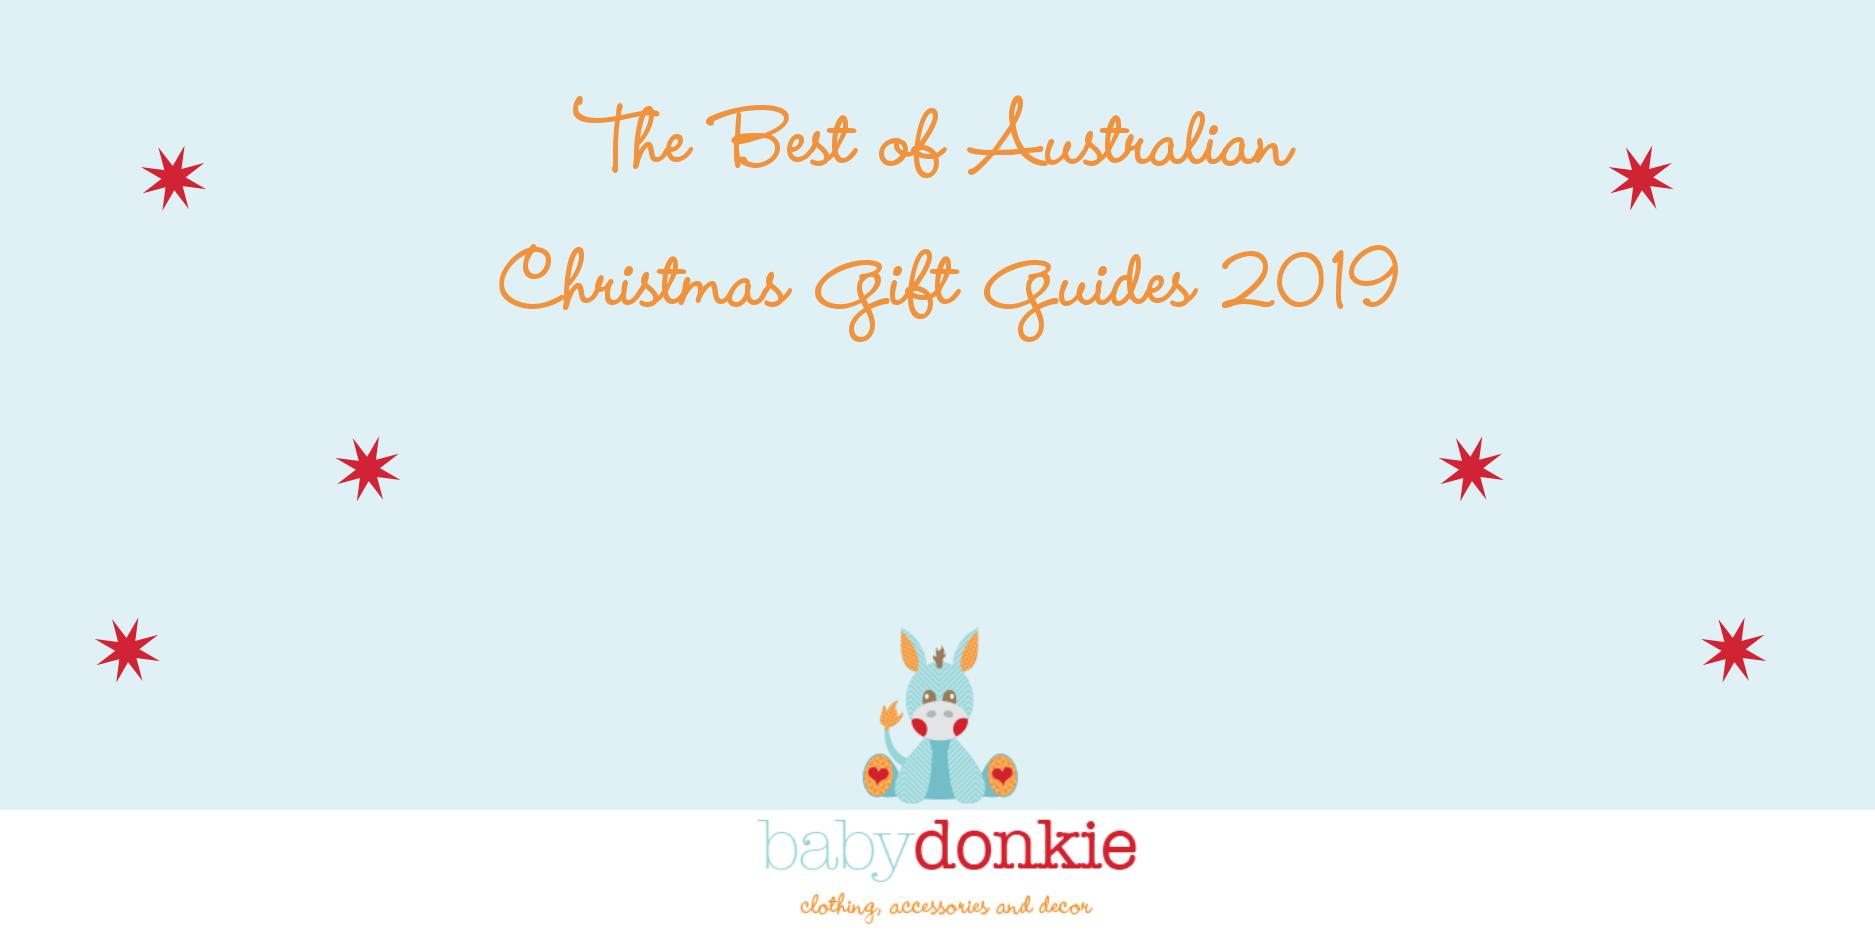 The Best of Australian Christmas Gift Guides 2019